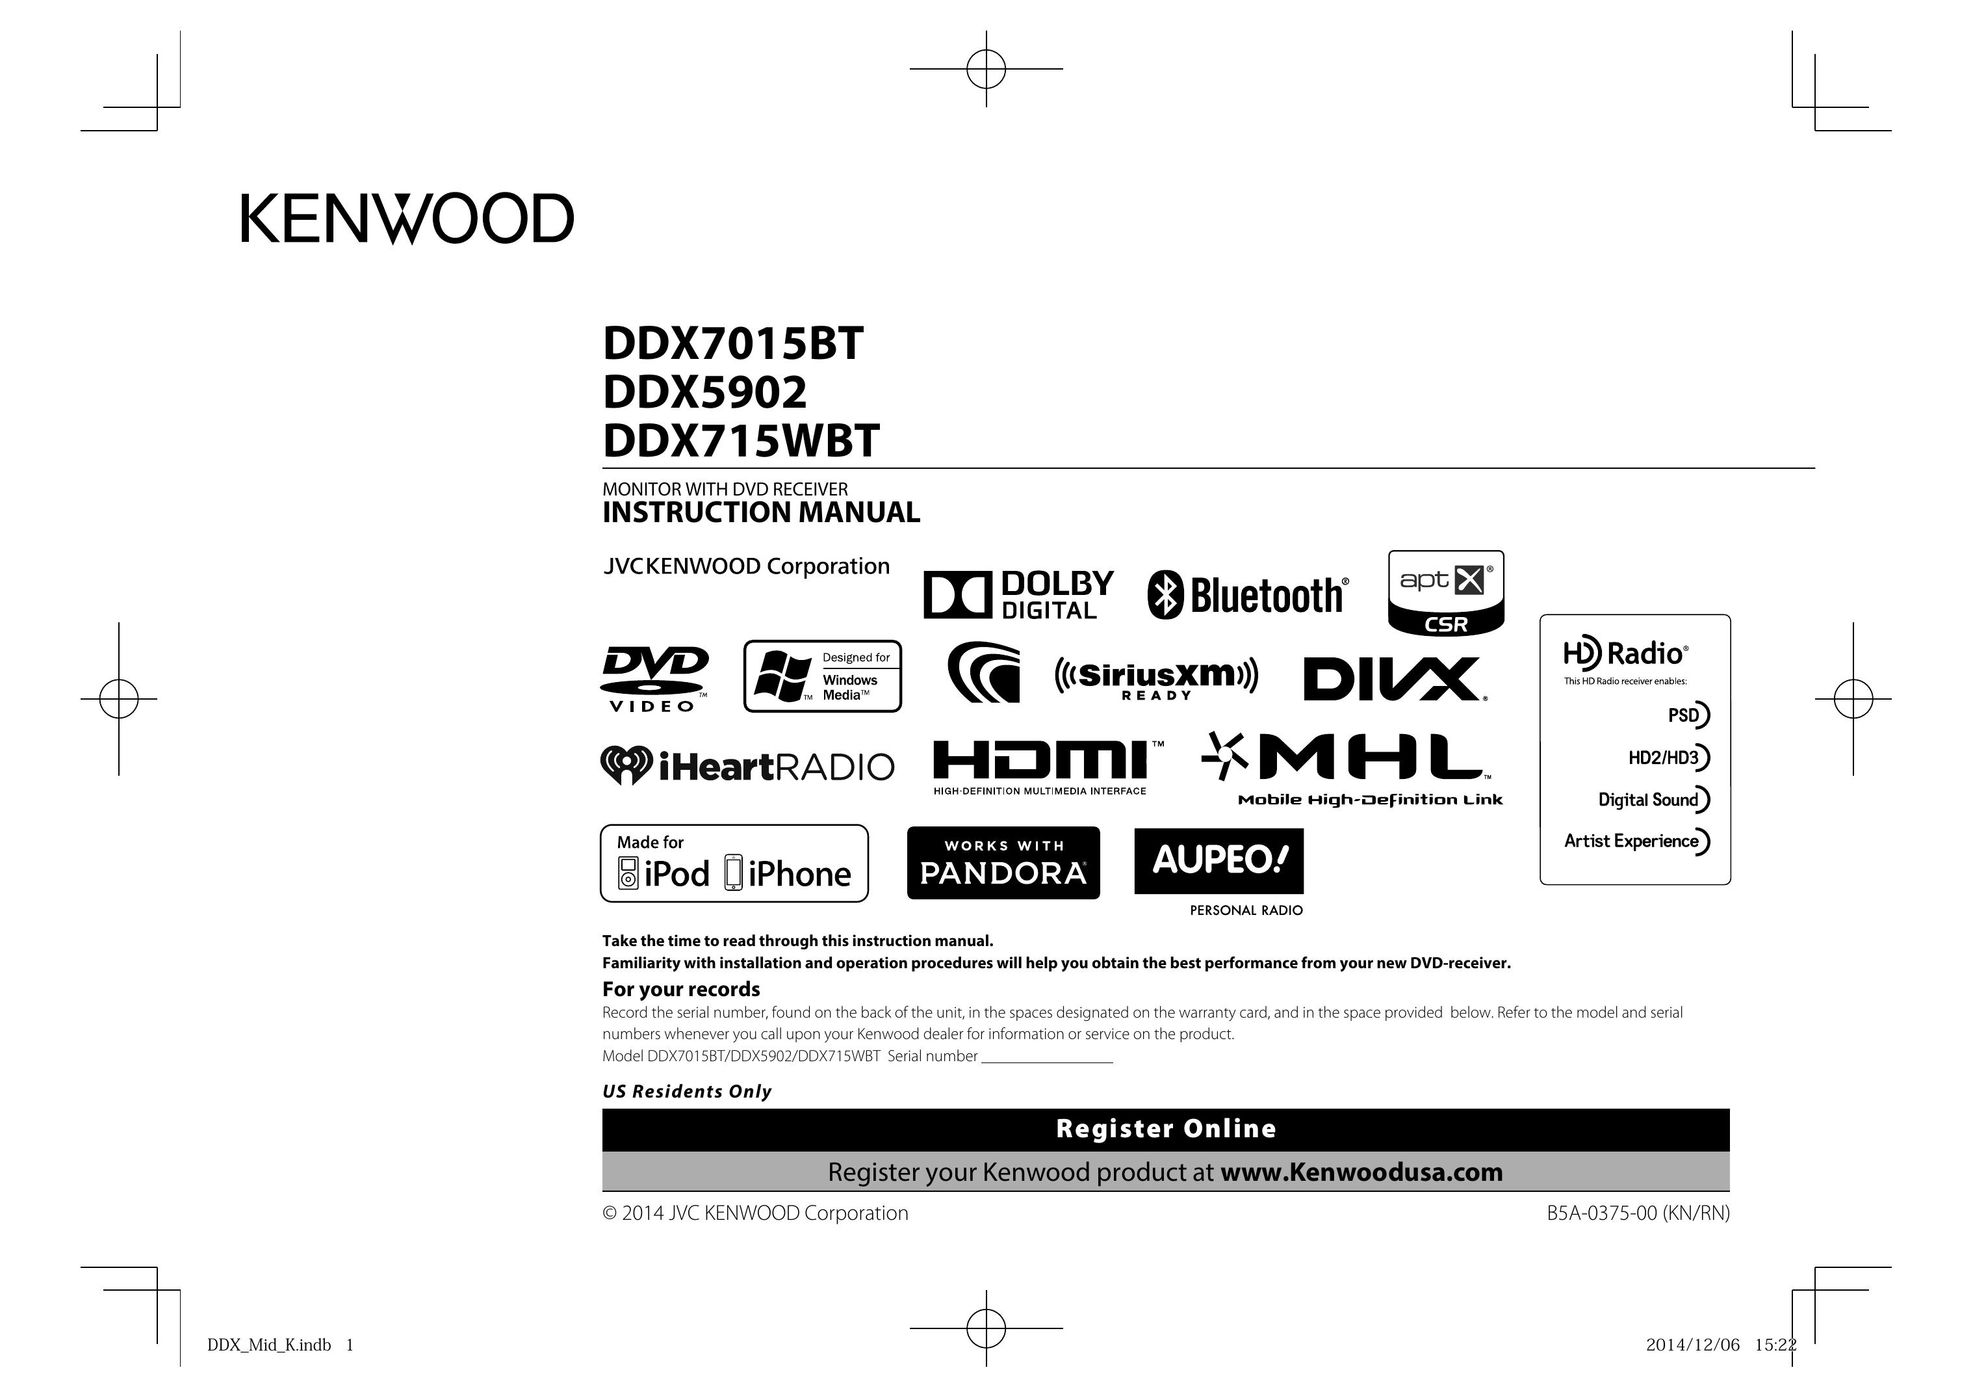 Kenwood DDX5902 Car Video System User Manual